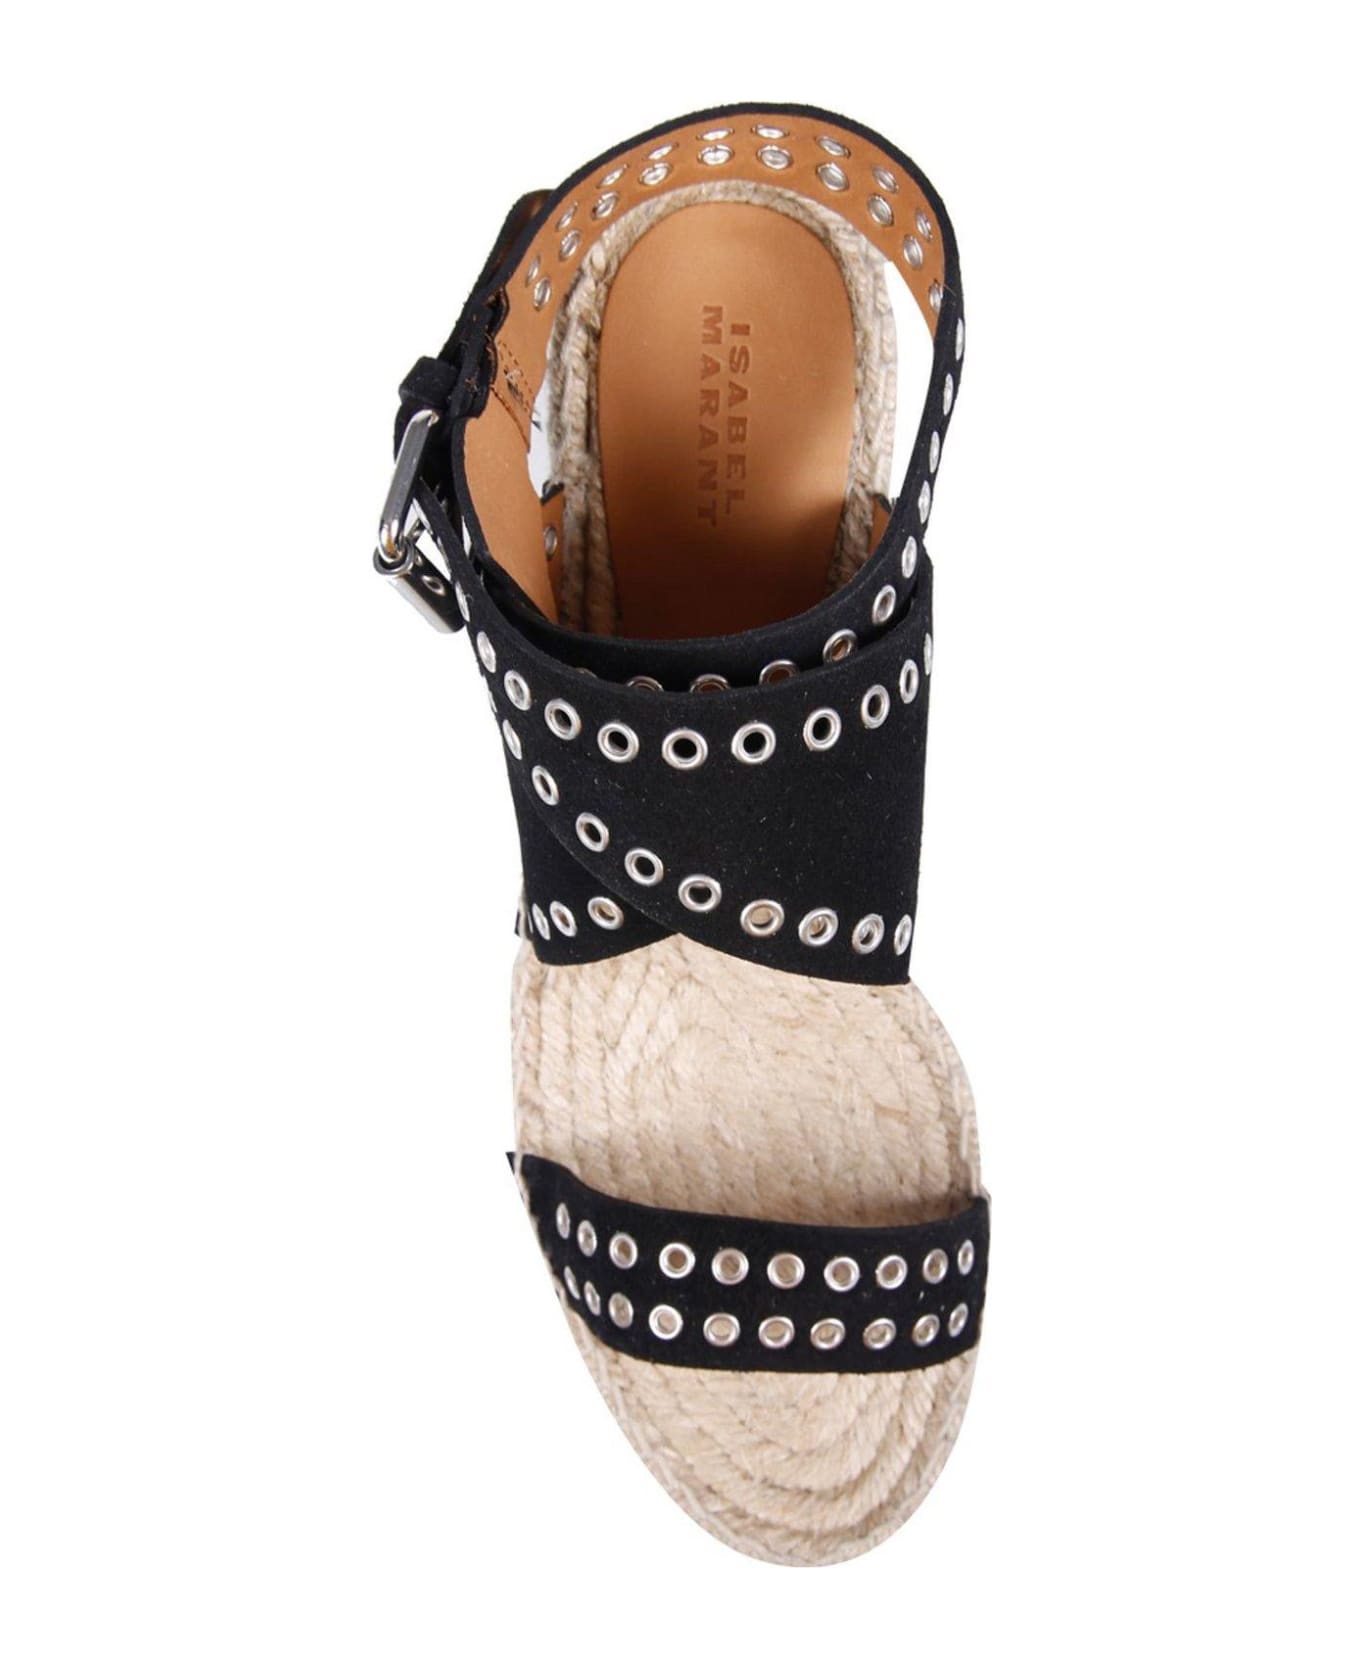 Isabel Marant Open Toe Platform Wedge Sandals - Black サンダル